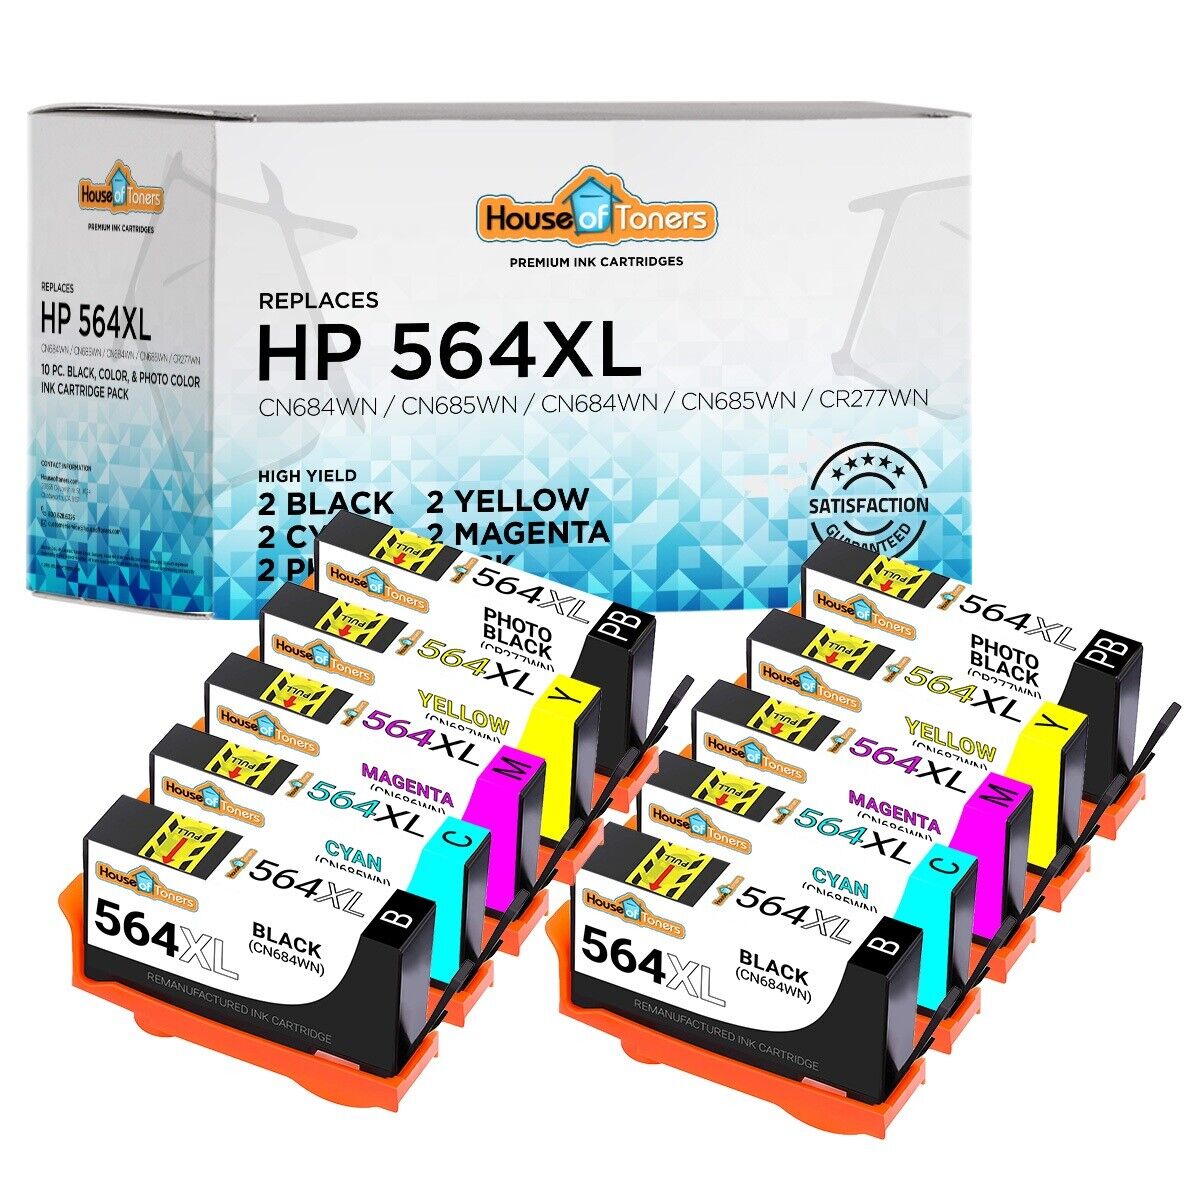 10PK for HP 564XL Ink Cartridges for HP Photosmart 7510 7515 7520 7525 B109 B110